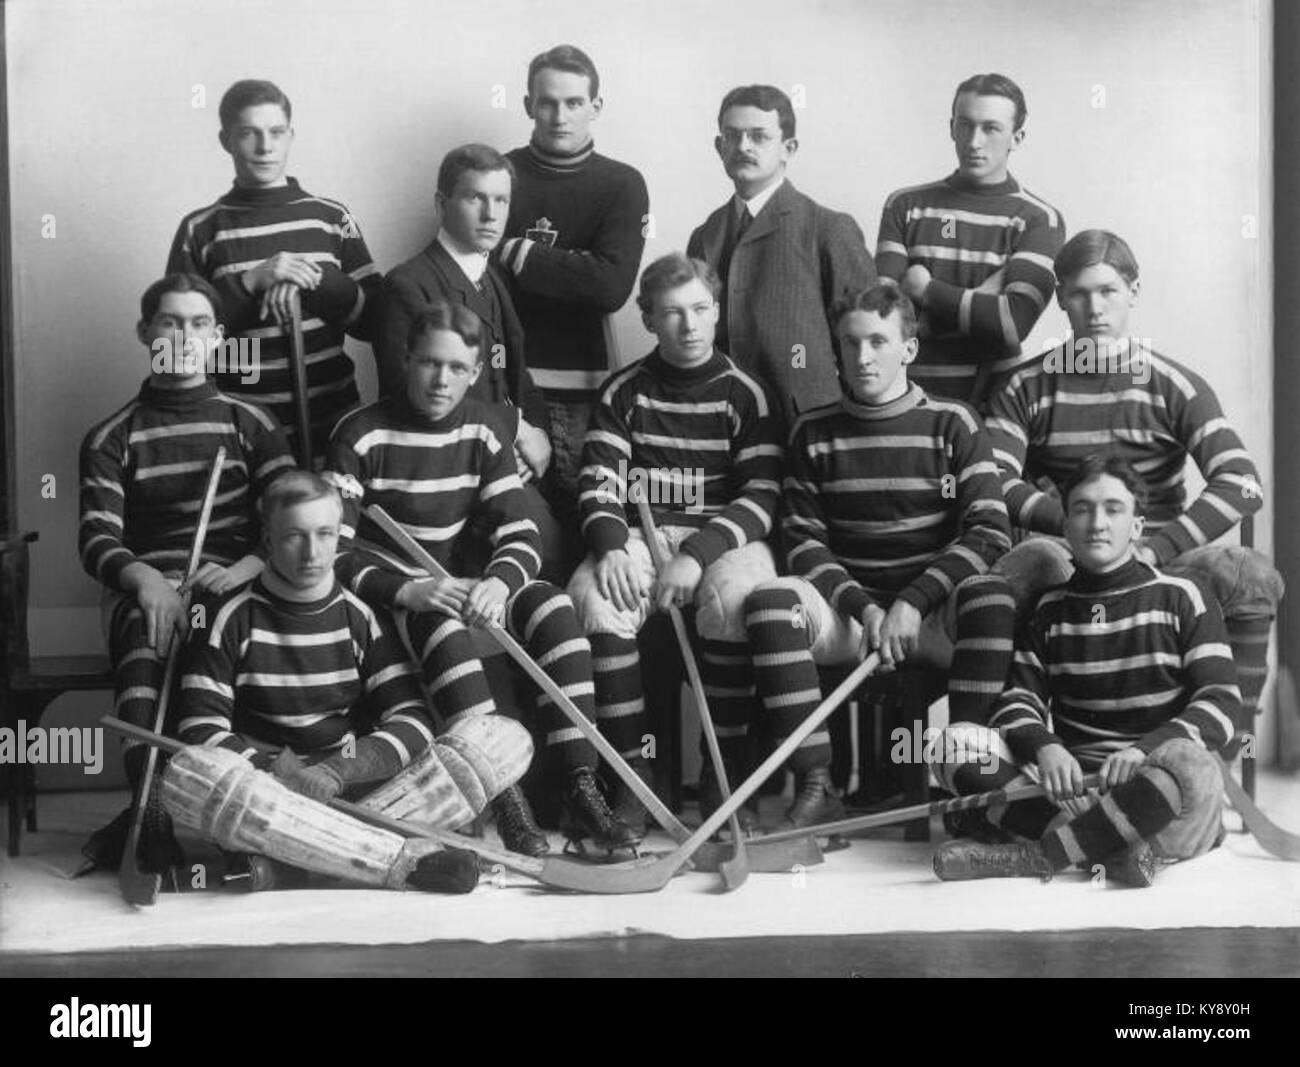 mcgill-hockey-team-montreal-qc-1904-KY8Y0H.jpg